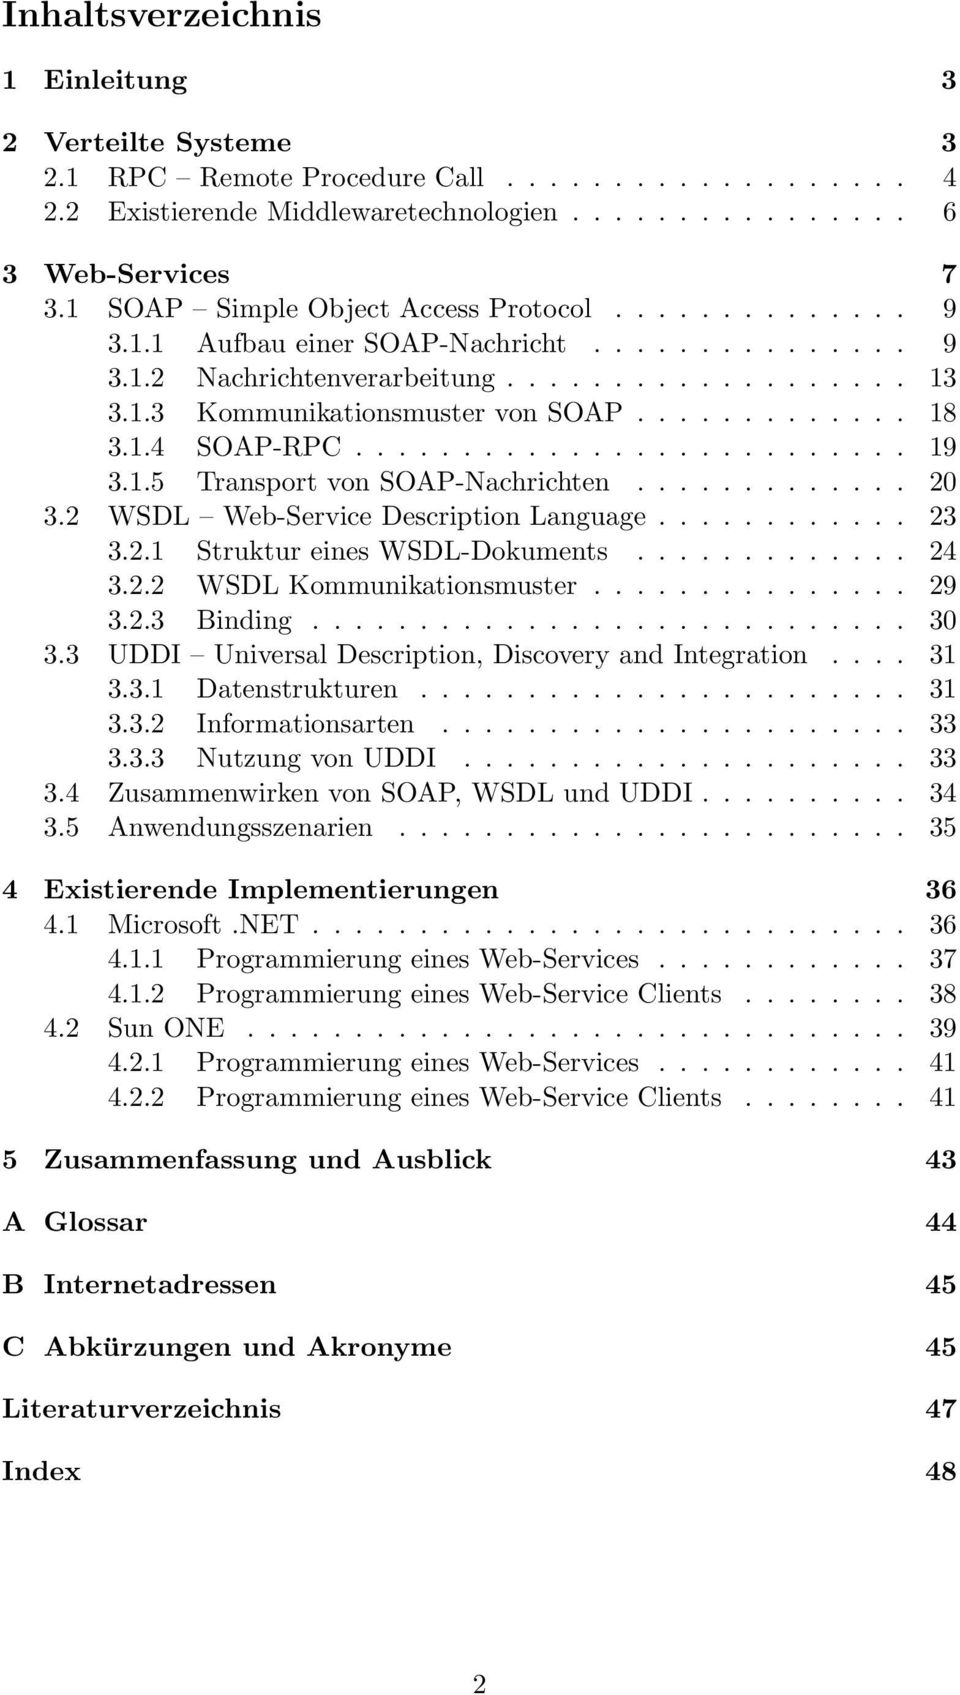 1.4 SOAP-RPC.......................... 19 3.1.5 Transport von SOAP-Nachrichten............. 20 3.2 WSDL Web-Service Description Language............ 23 3.2.1 Struktur eines WSDL-Dokuments............. 24 3.